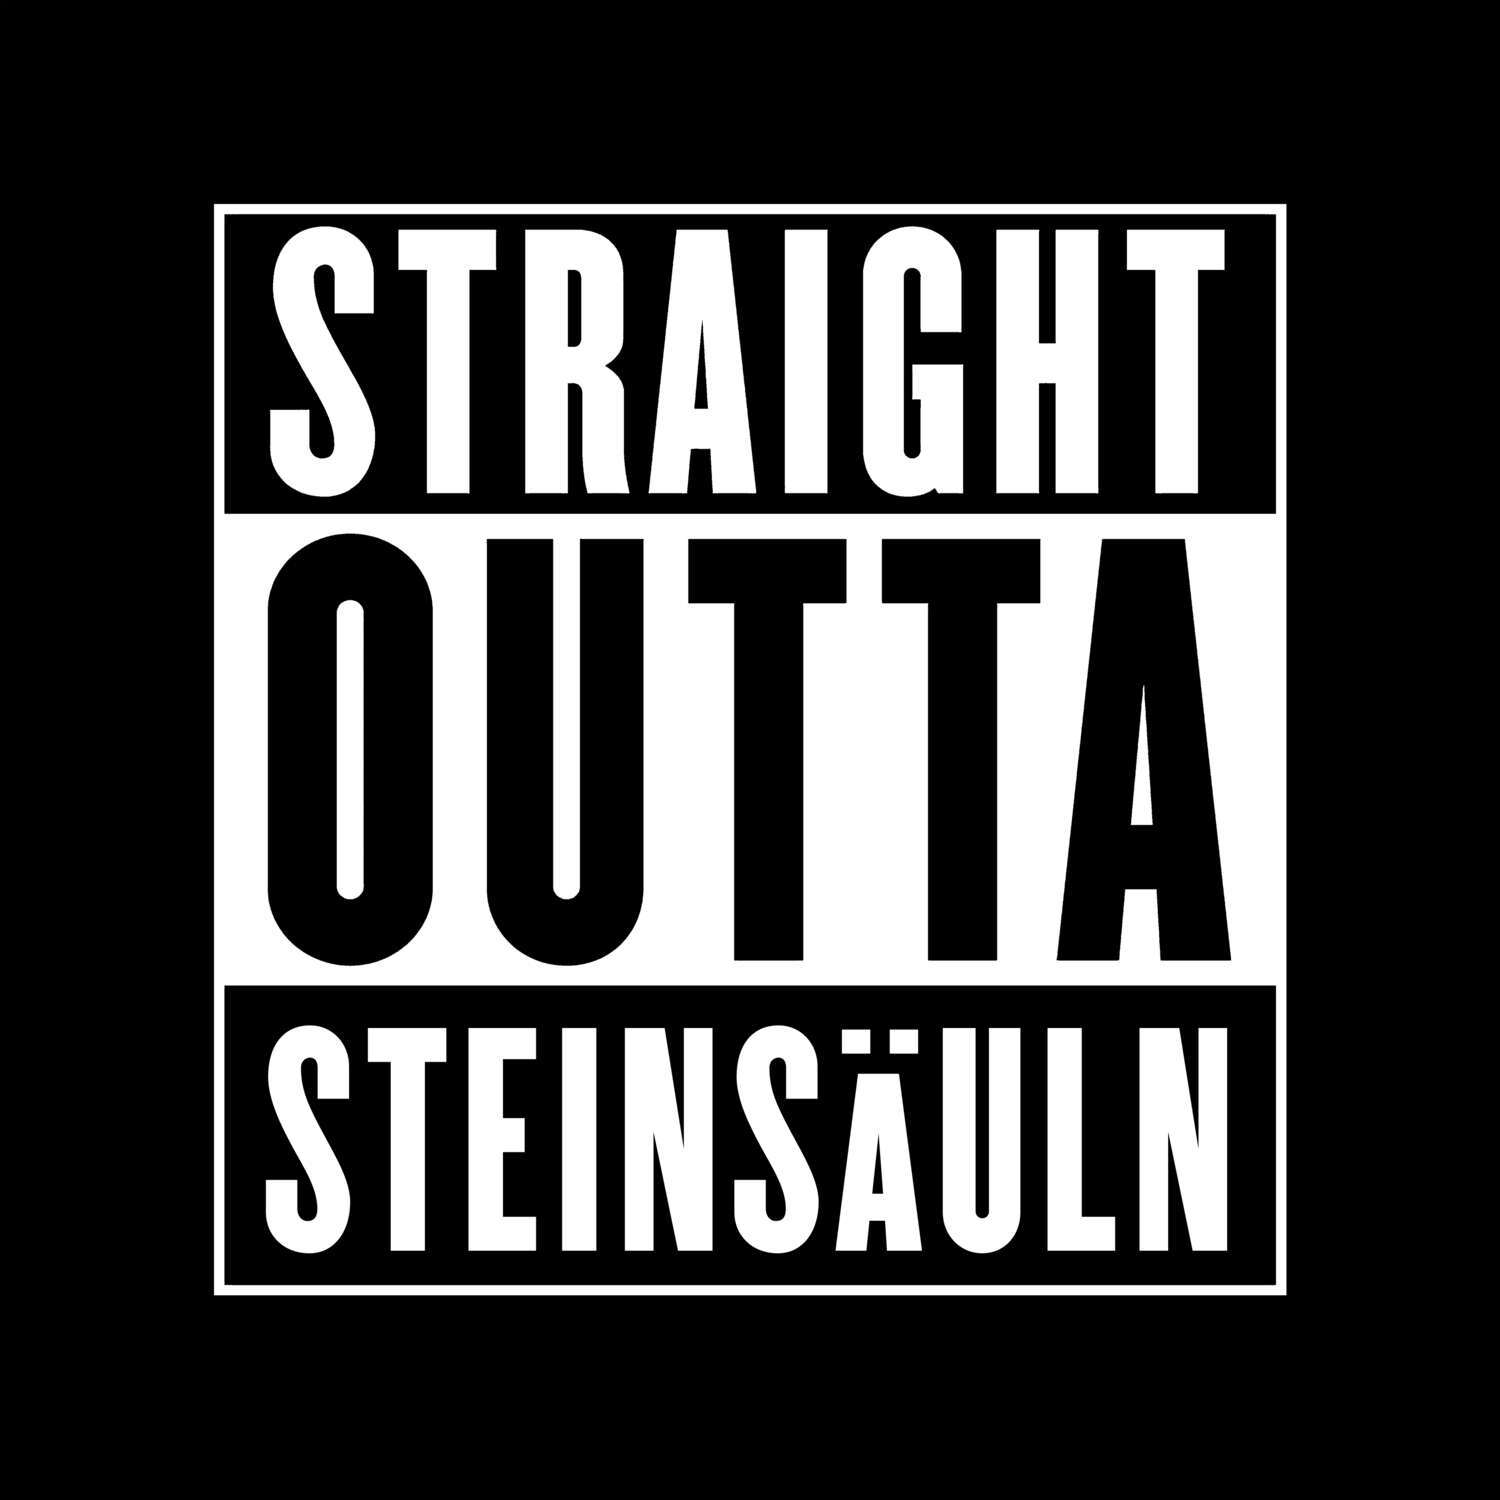 Steinsäuln T-Shirt »Straight Outta«